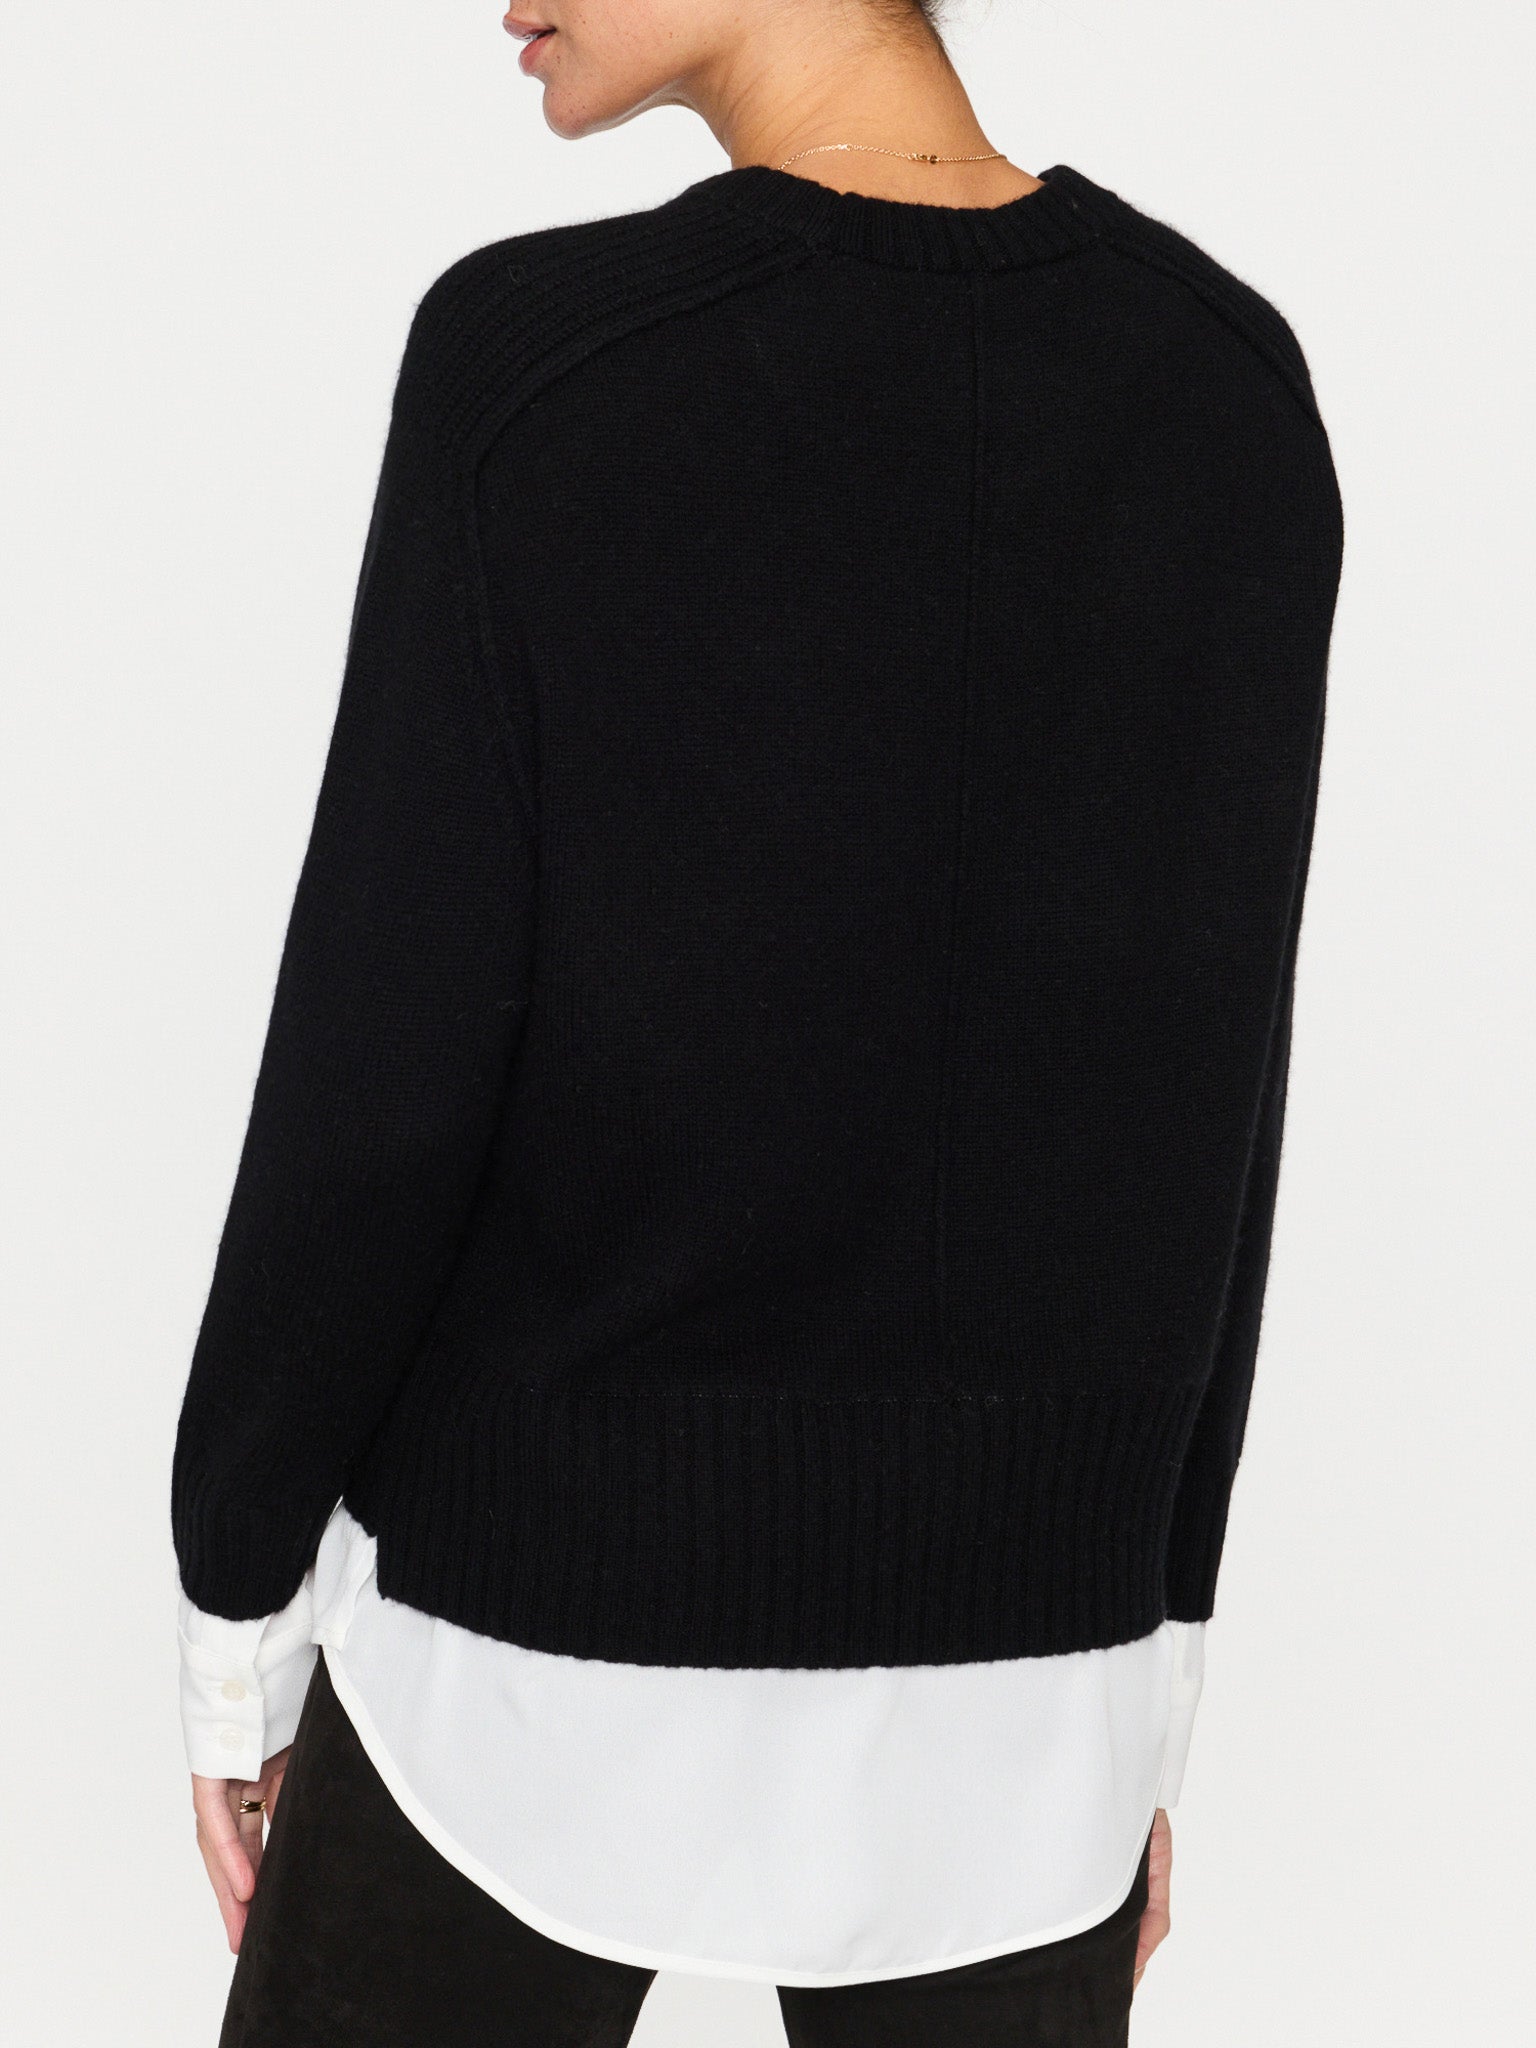 Parson cashmere-wool layered crewneck black sweater back view